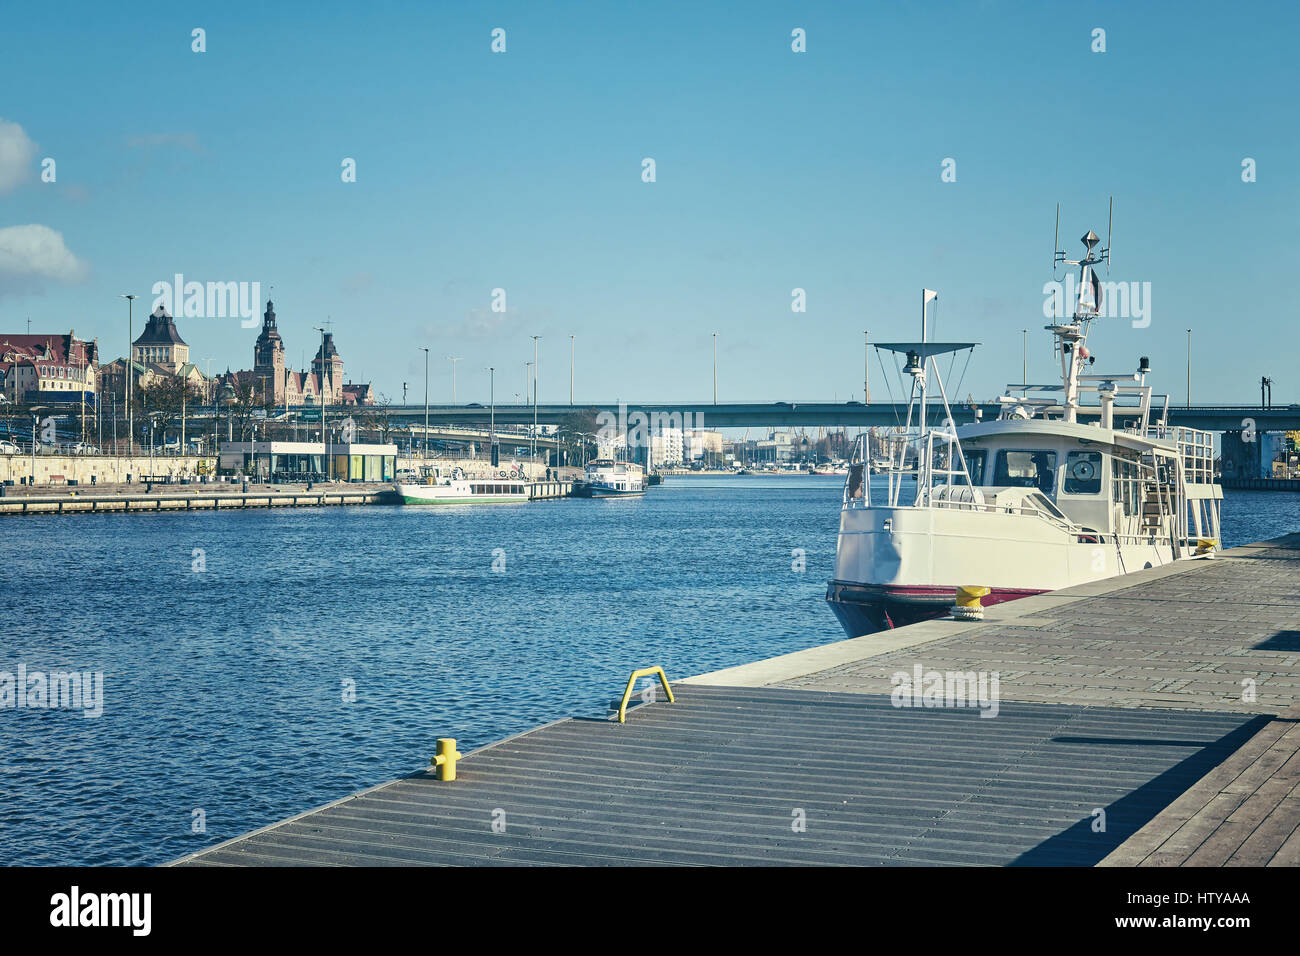 Retro stylized picture of Szczecin (Stettin) city waterfront, Poland. Stock Photo